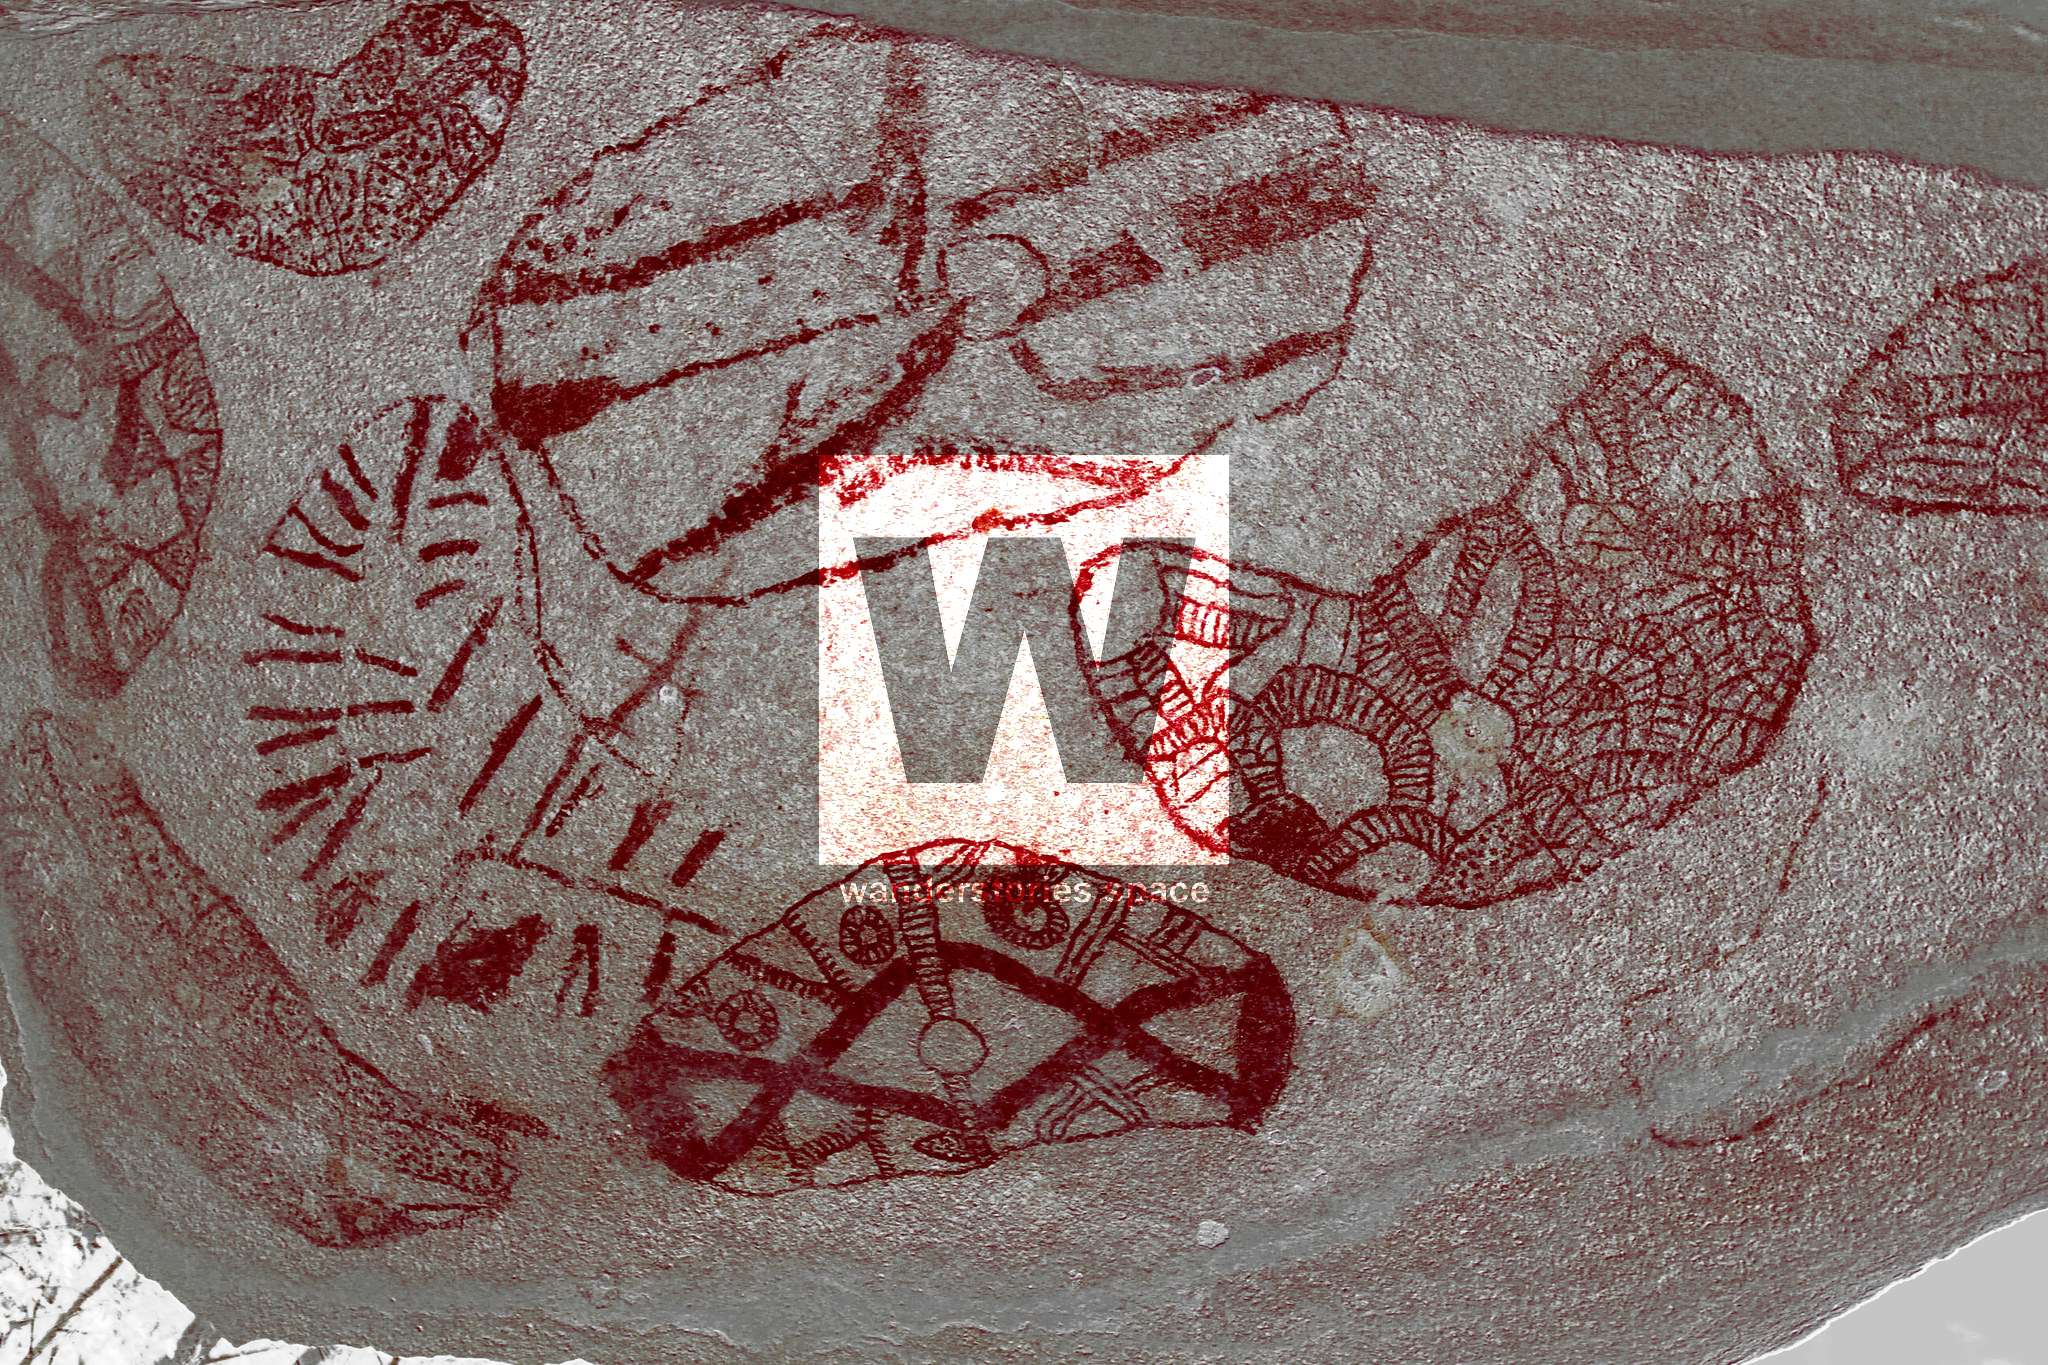 Clevdon aboriginal rock art - software enhanced